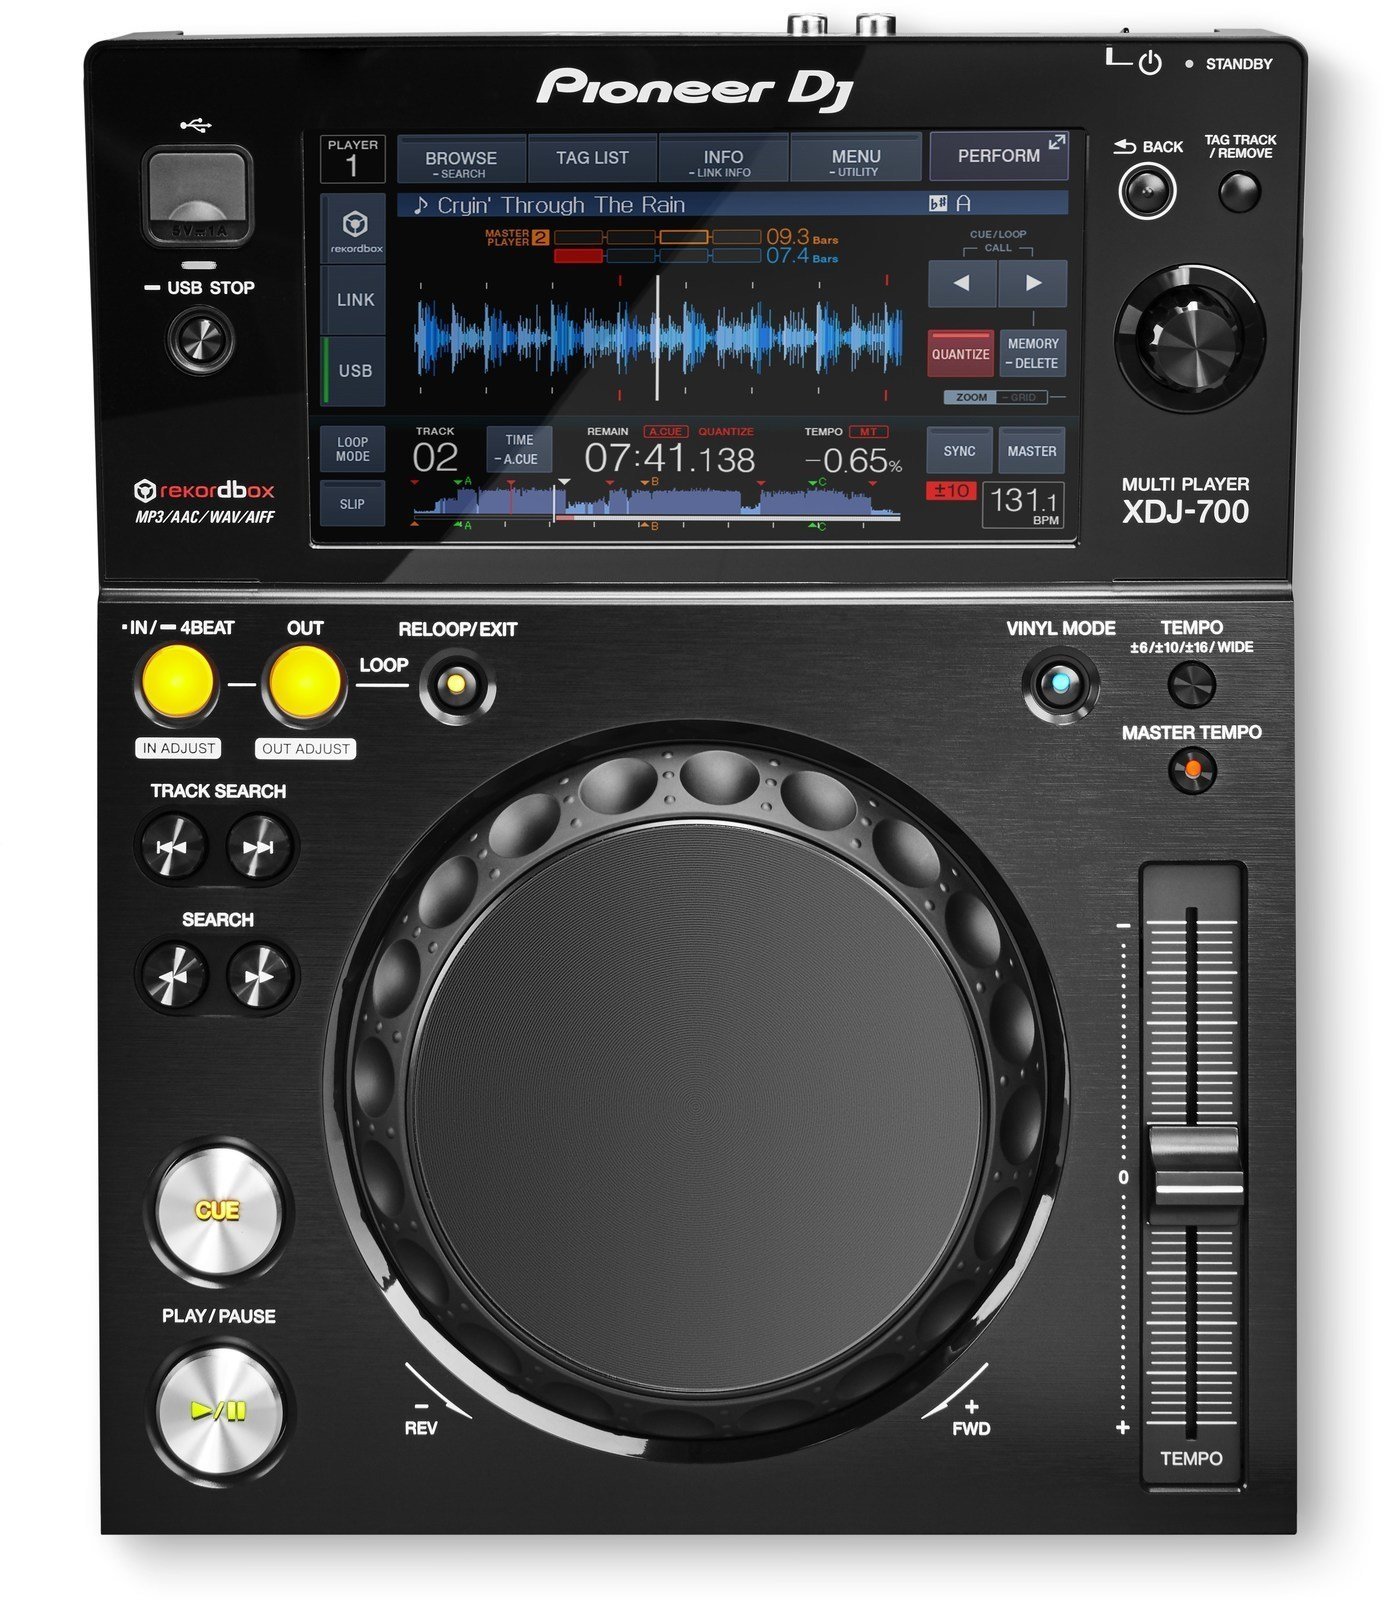 Desk DJ Player Pioneer Dj XDJ-700